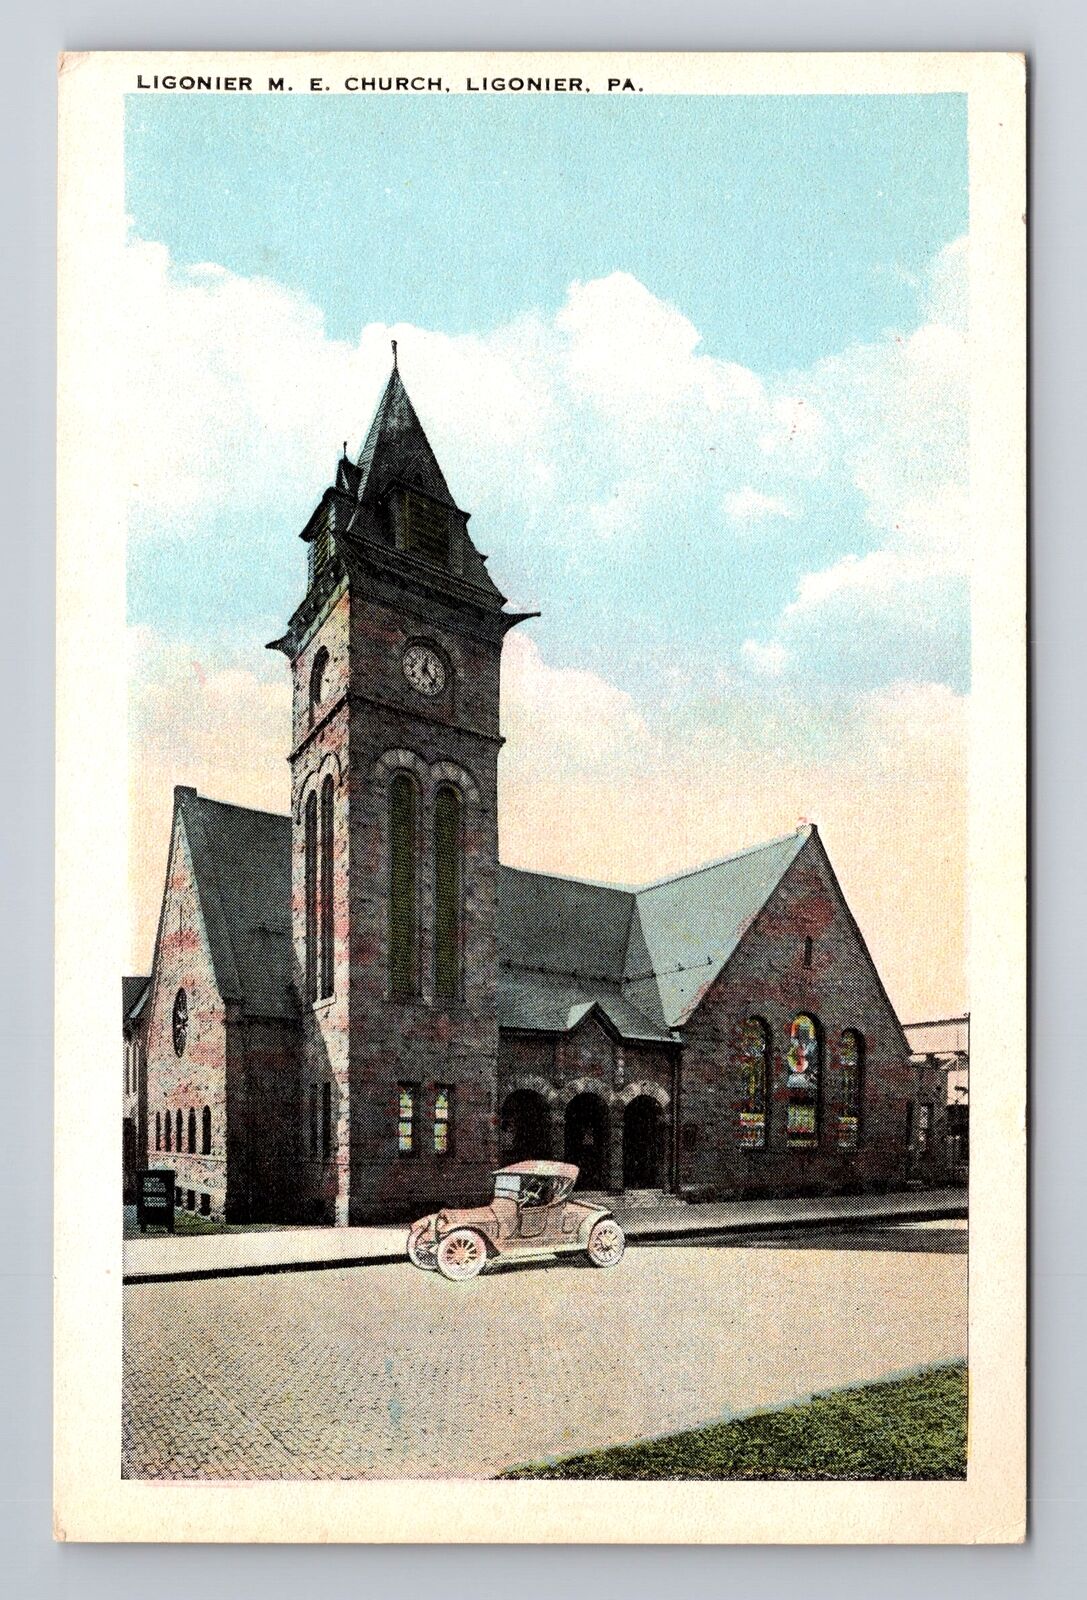 Ligonier PA-Pennsylvania, Ligonier ME Church, Religion Antique Vintage Postcard